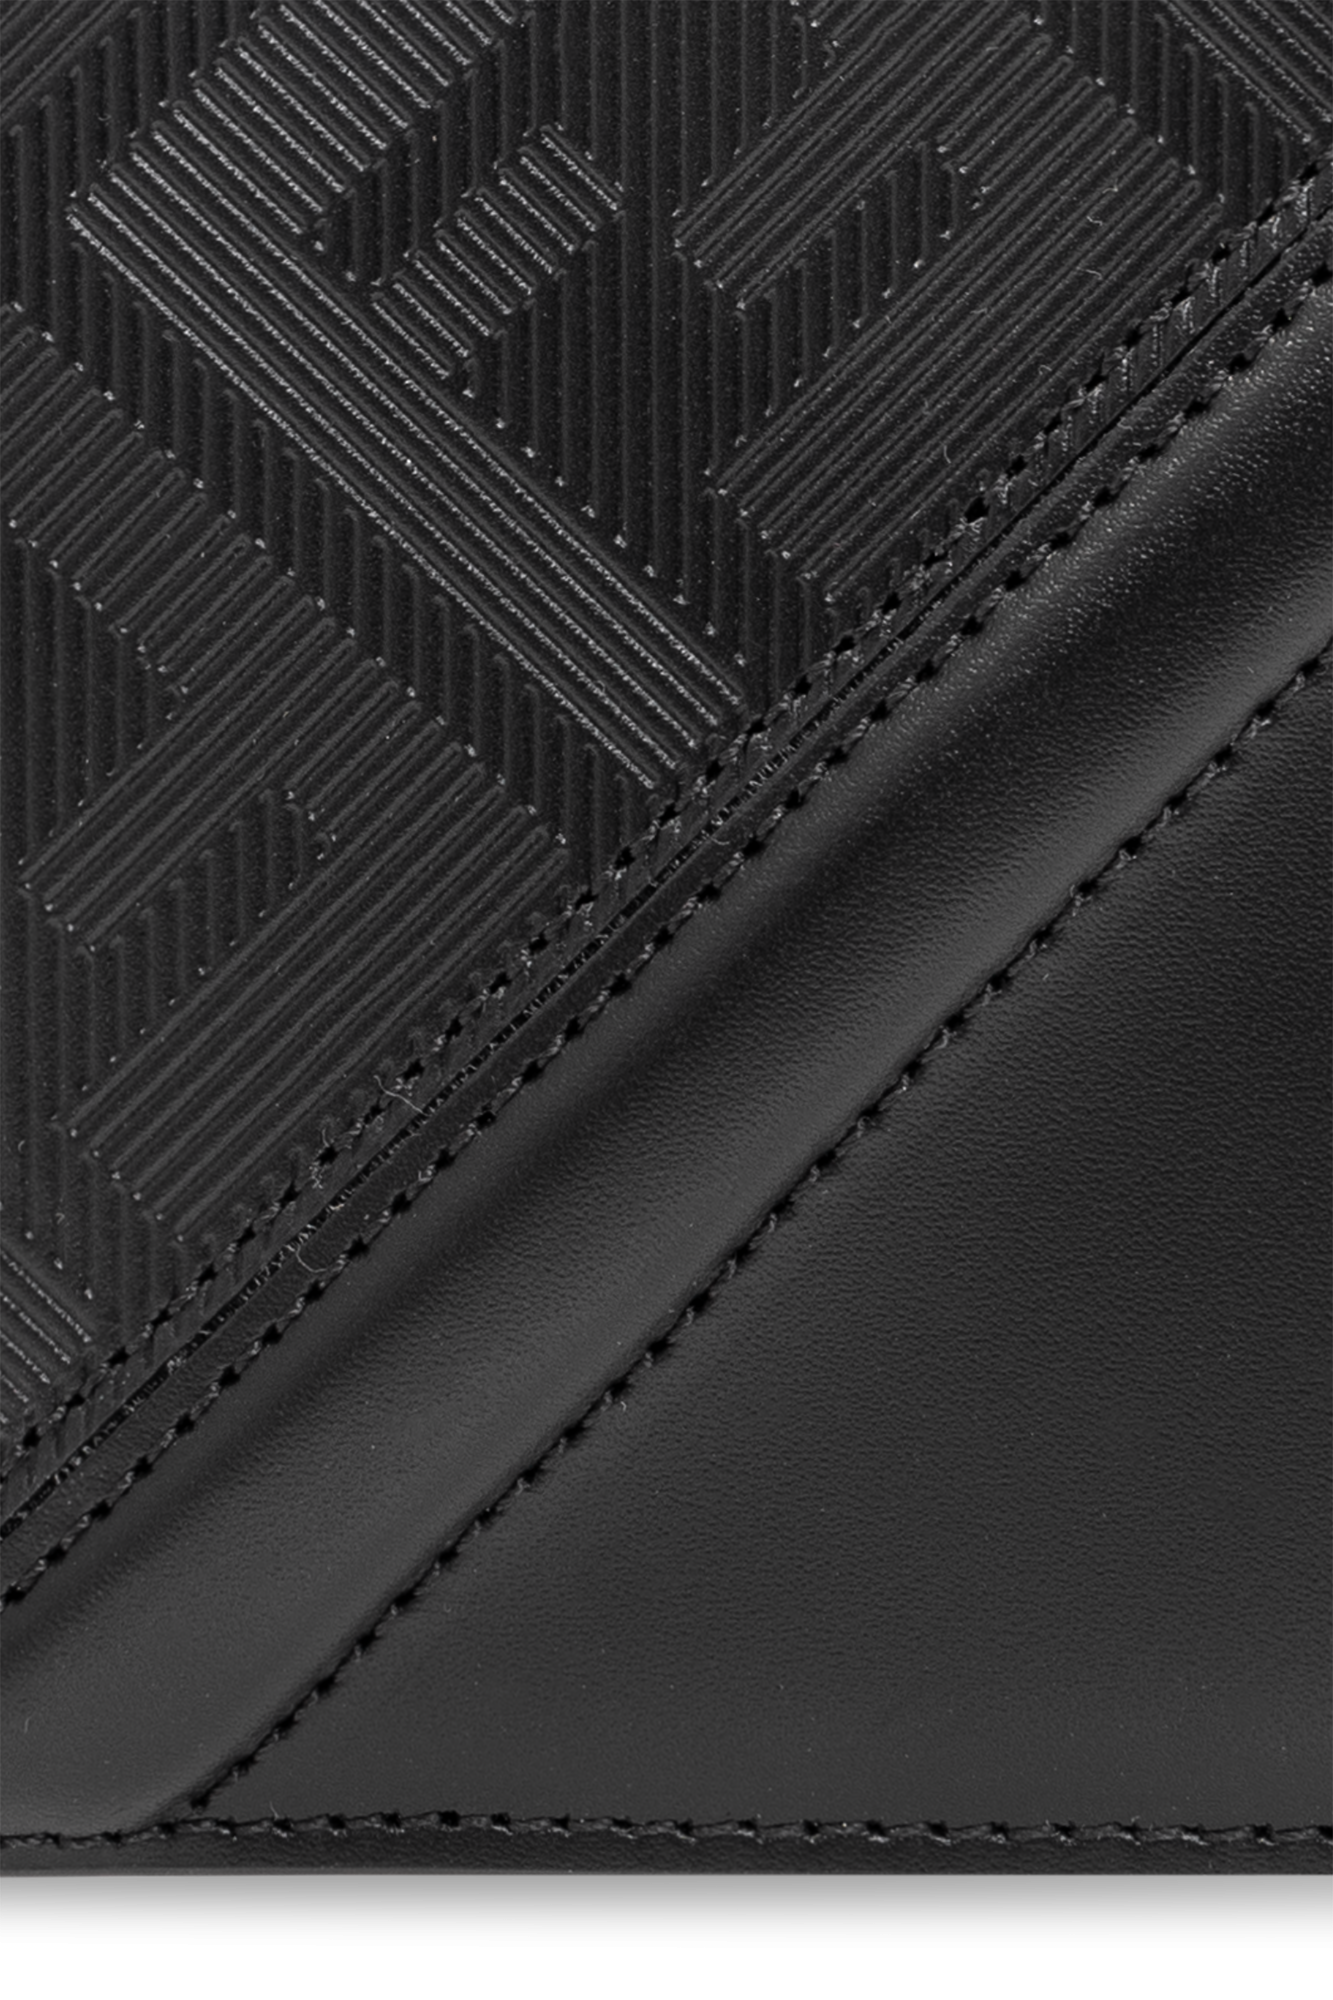 Luxury Wallet - Black Fendi Wallet with FF embossed pattern